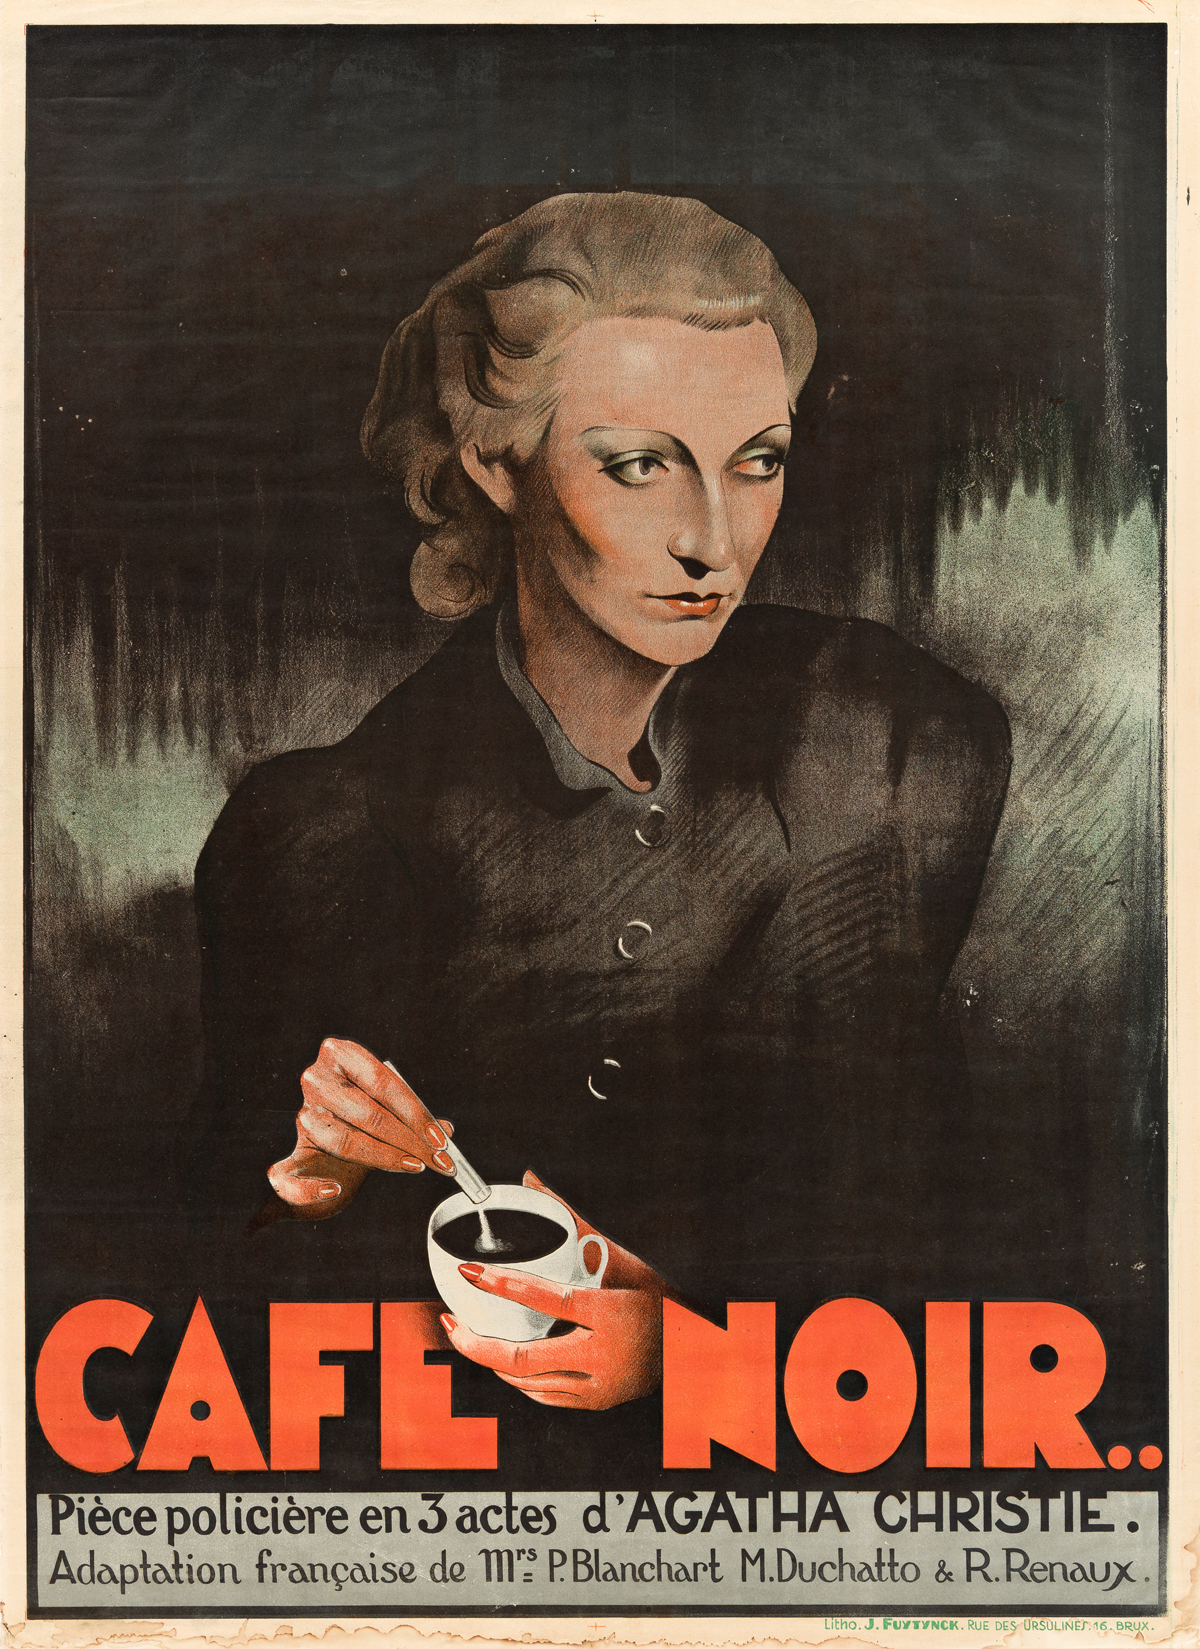 DESIGNER UNKNOWN.  CAFE NOIR / AGATHA CHRISTIE. 1938. 33½x24¼ inches, 85x61½ cm. J. Fuytynck, Brussels.